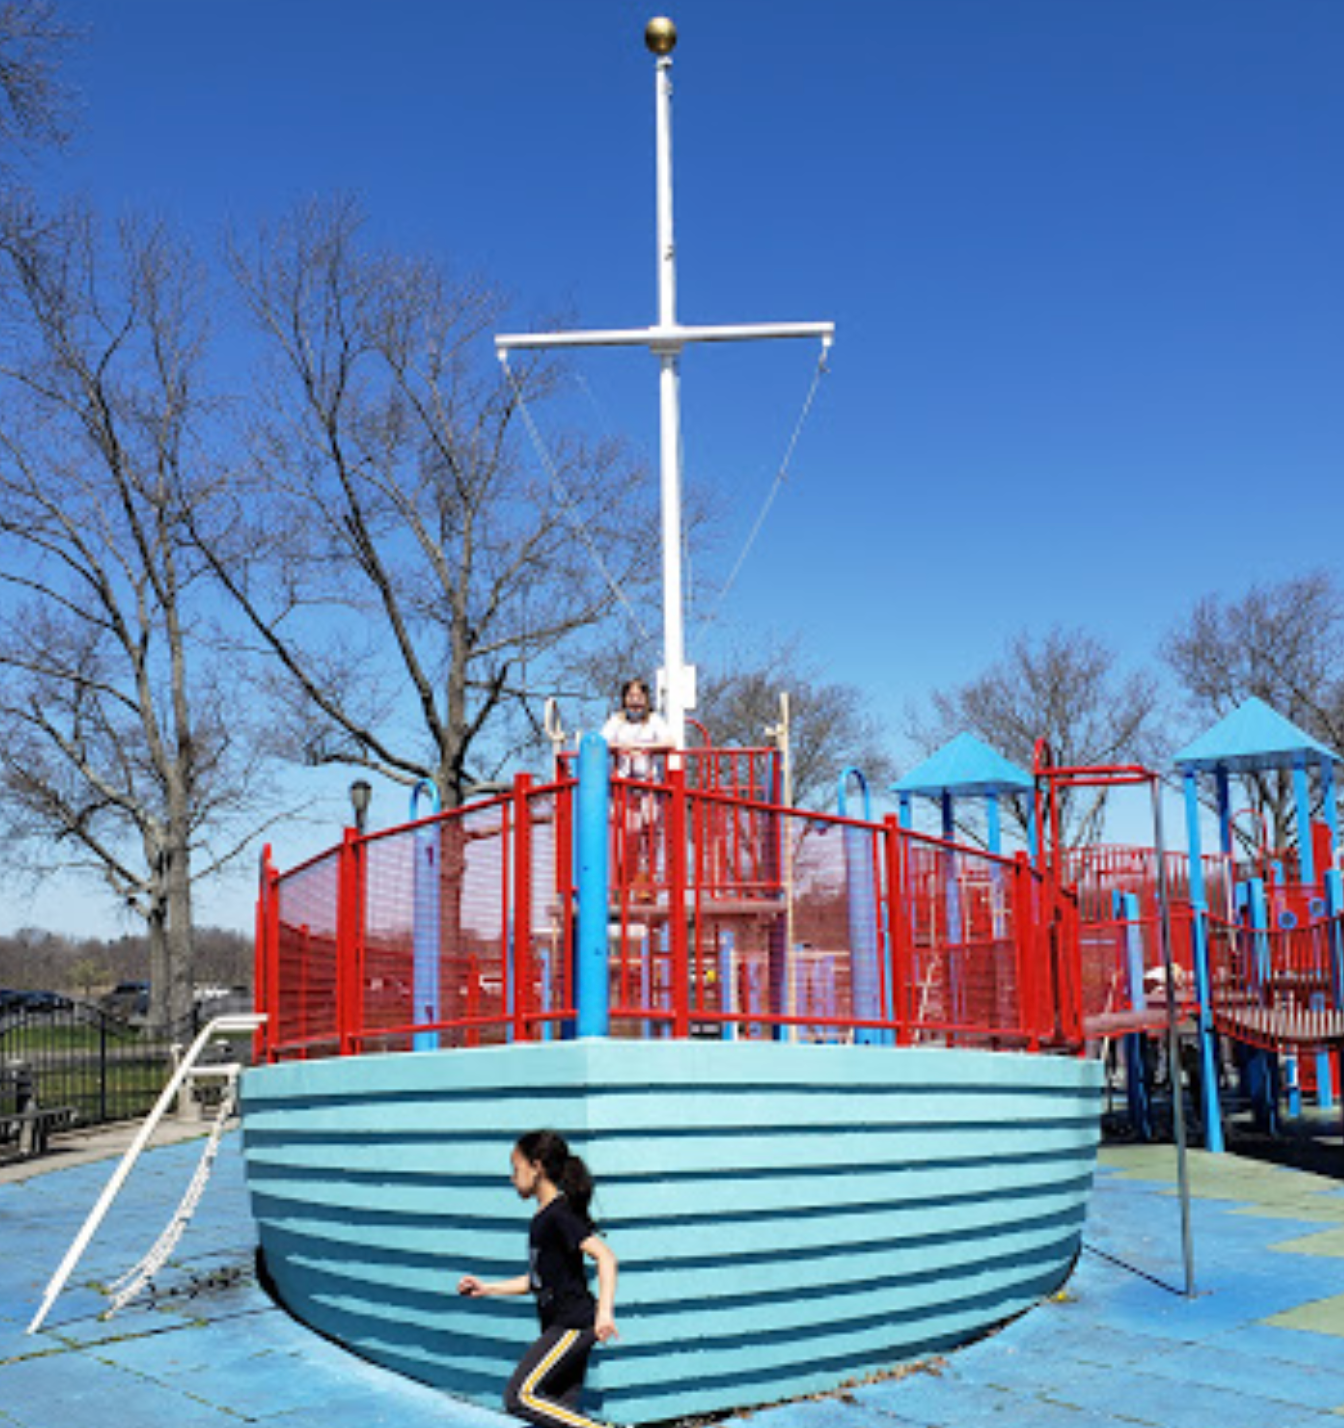 Pelican Bay Playground